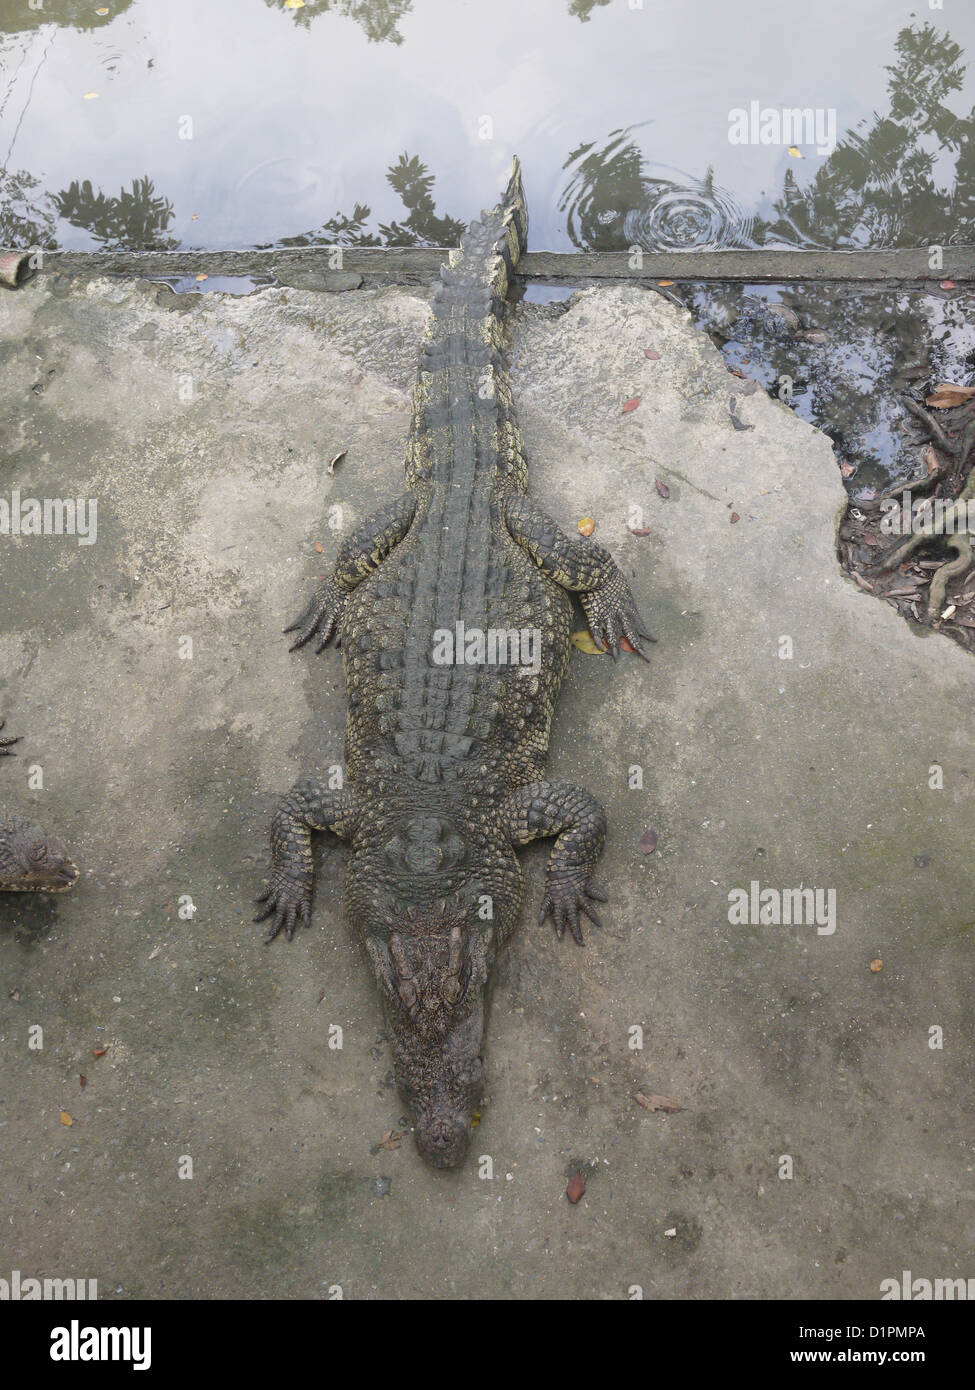 crocodile overhead view Stock Photo - Alamy